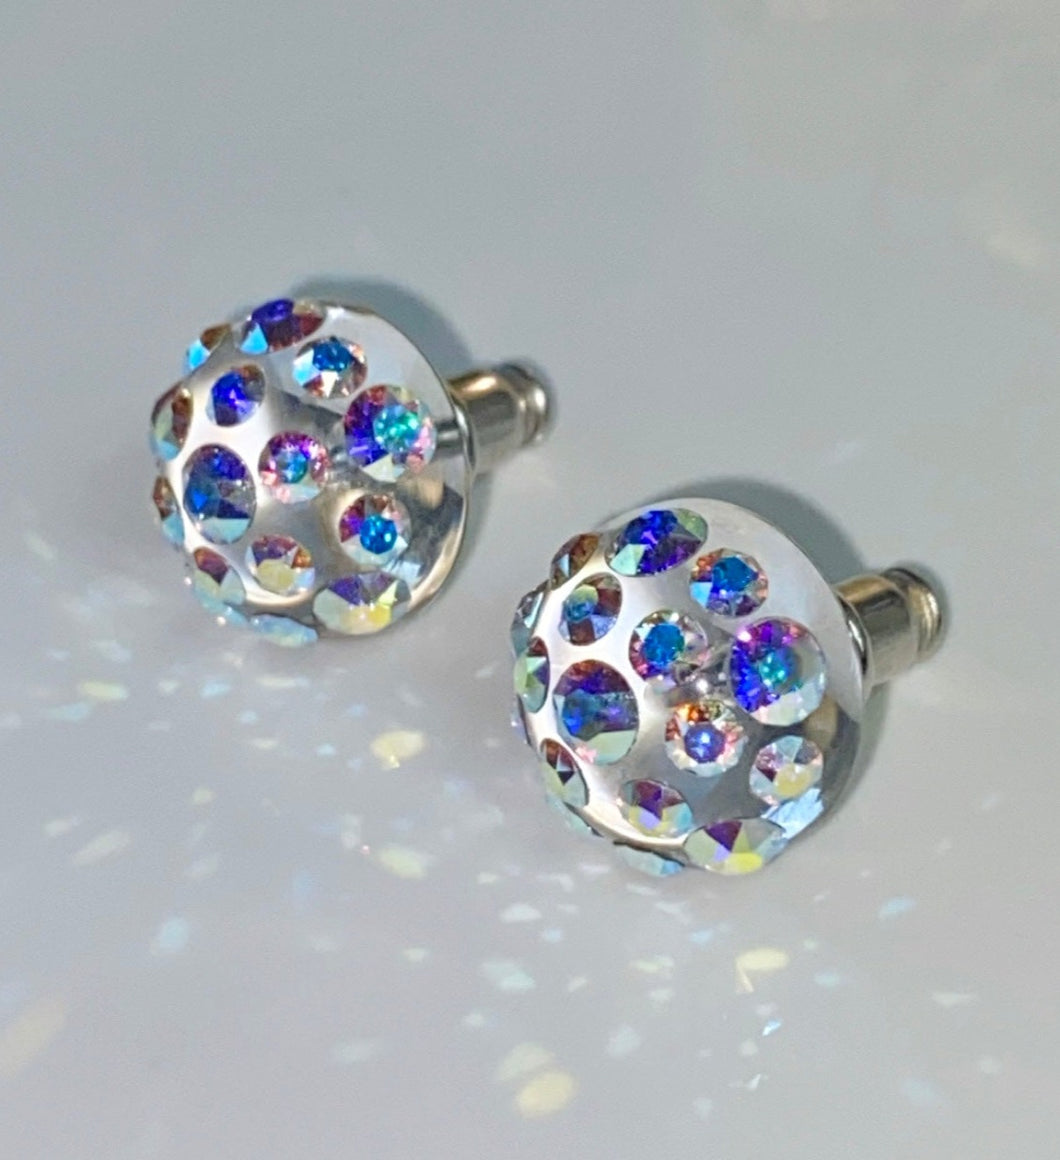 Clear Acrylic Stud Earrings With Aurora Borealis Crystal